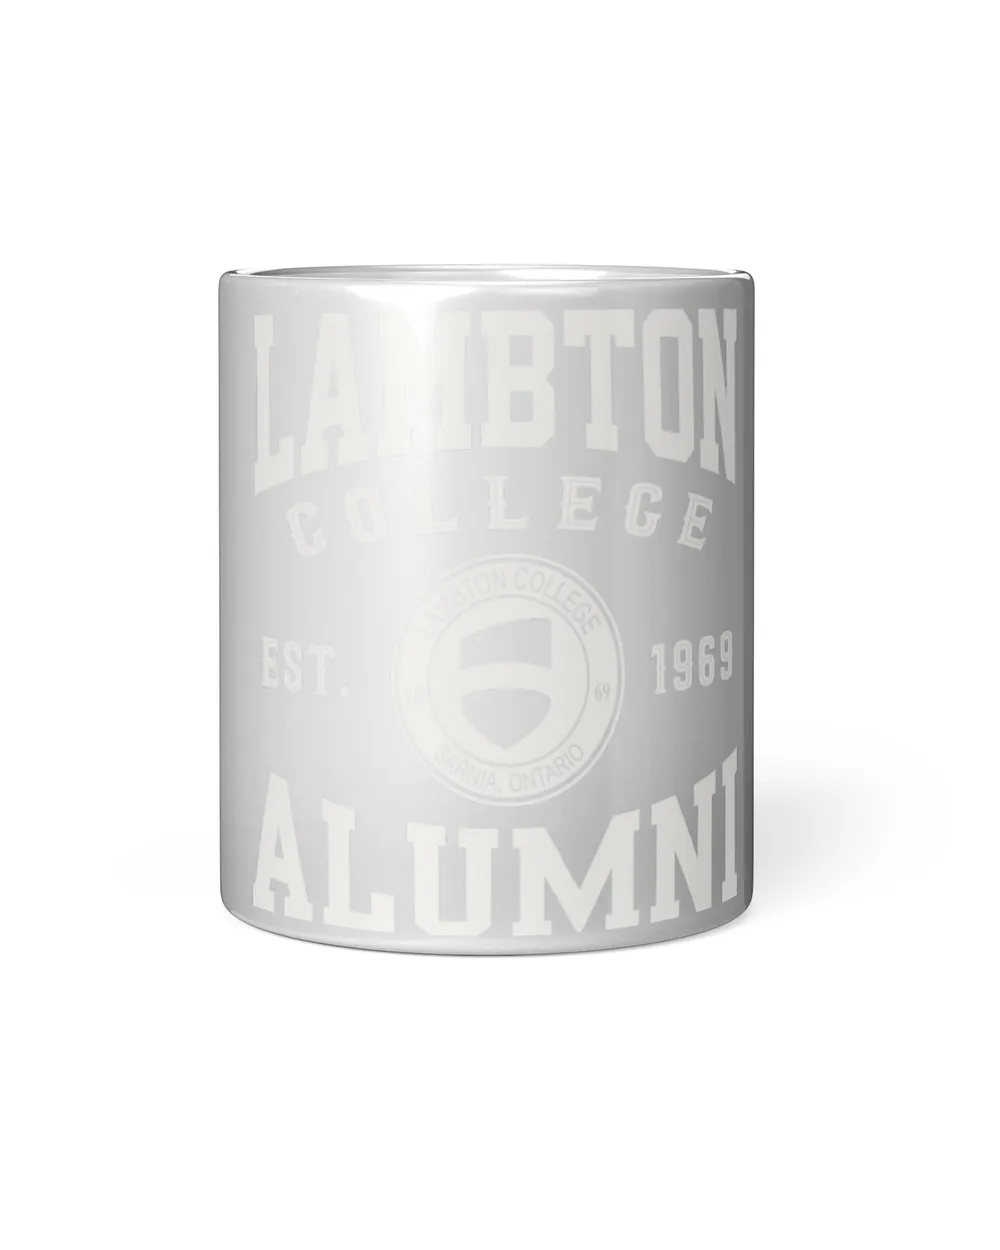 Lambton Col Cad Alumni